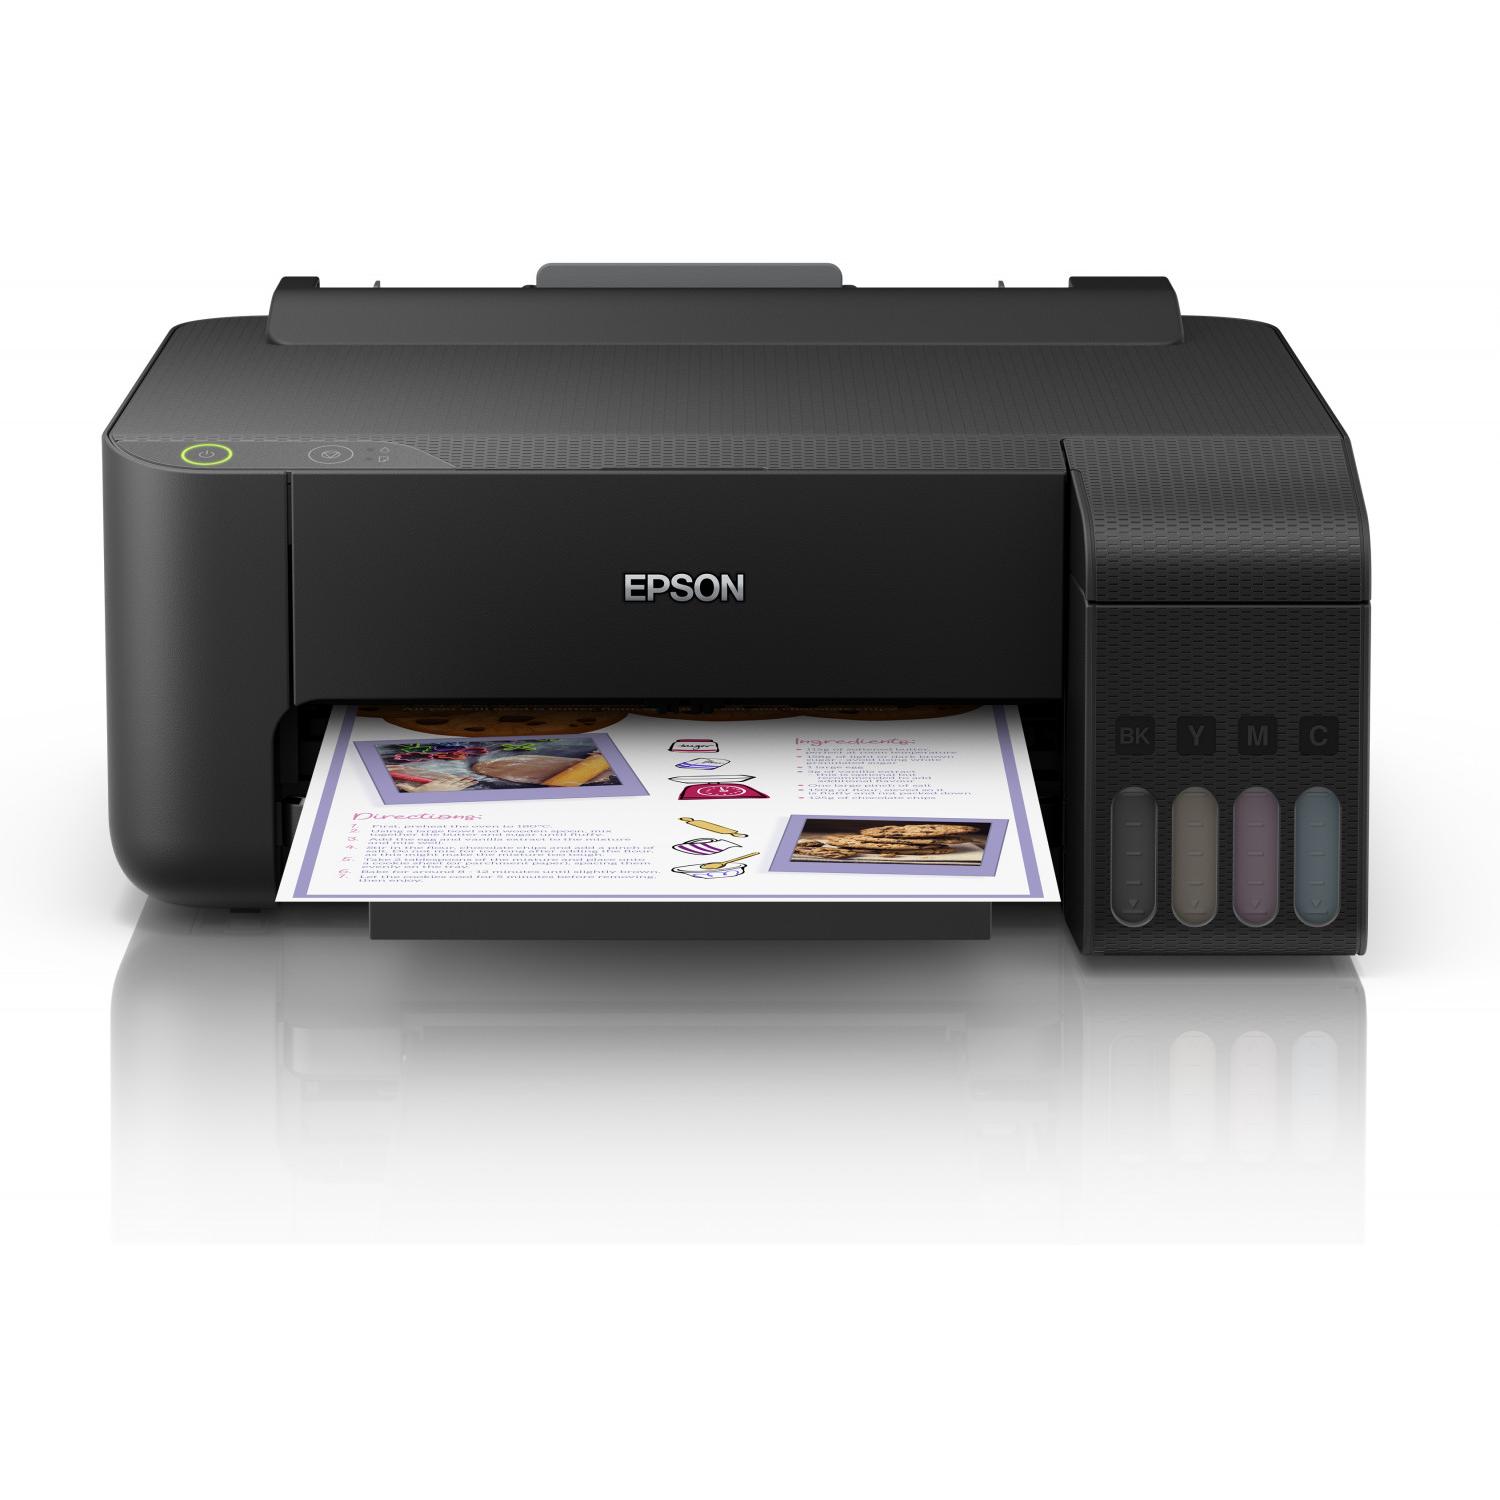 Harga Printer Epson Malaysia Harga Printer Epson L455 Termurah 2020 7262